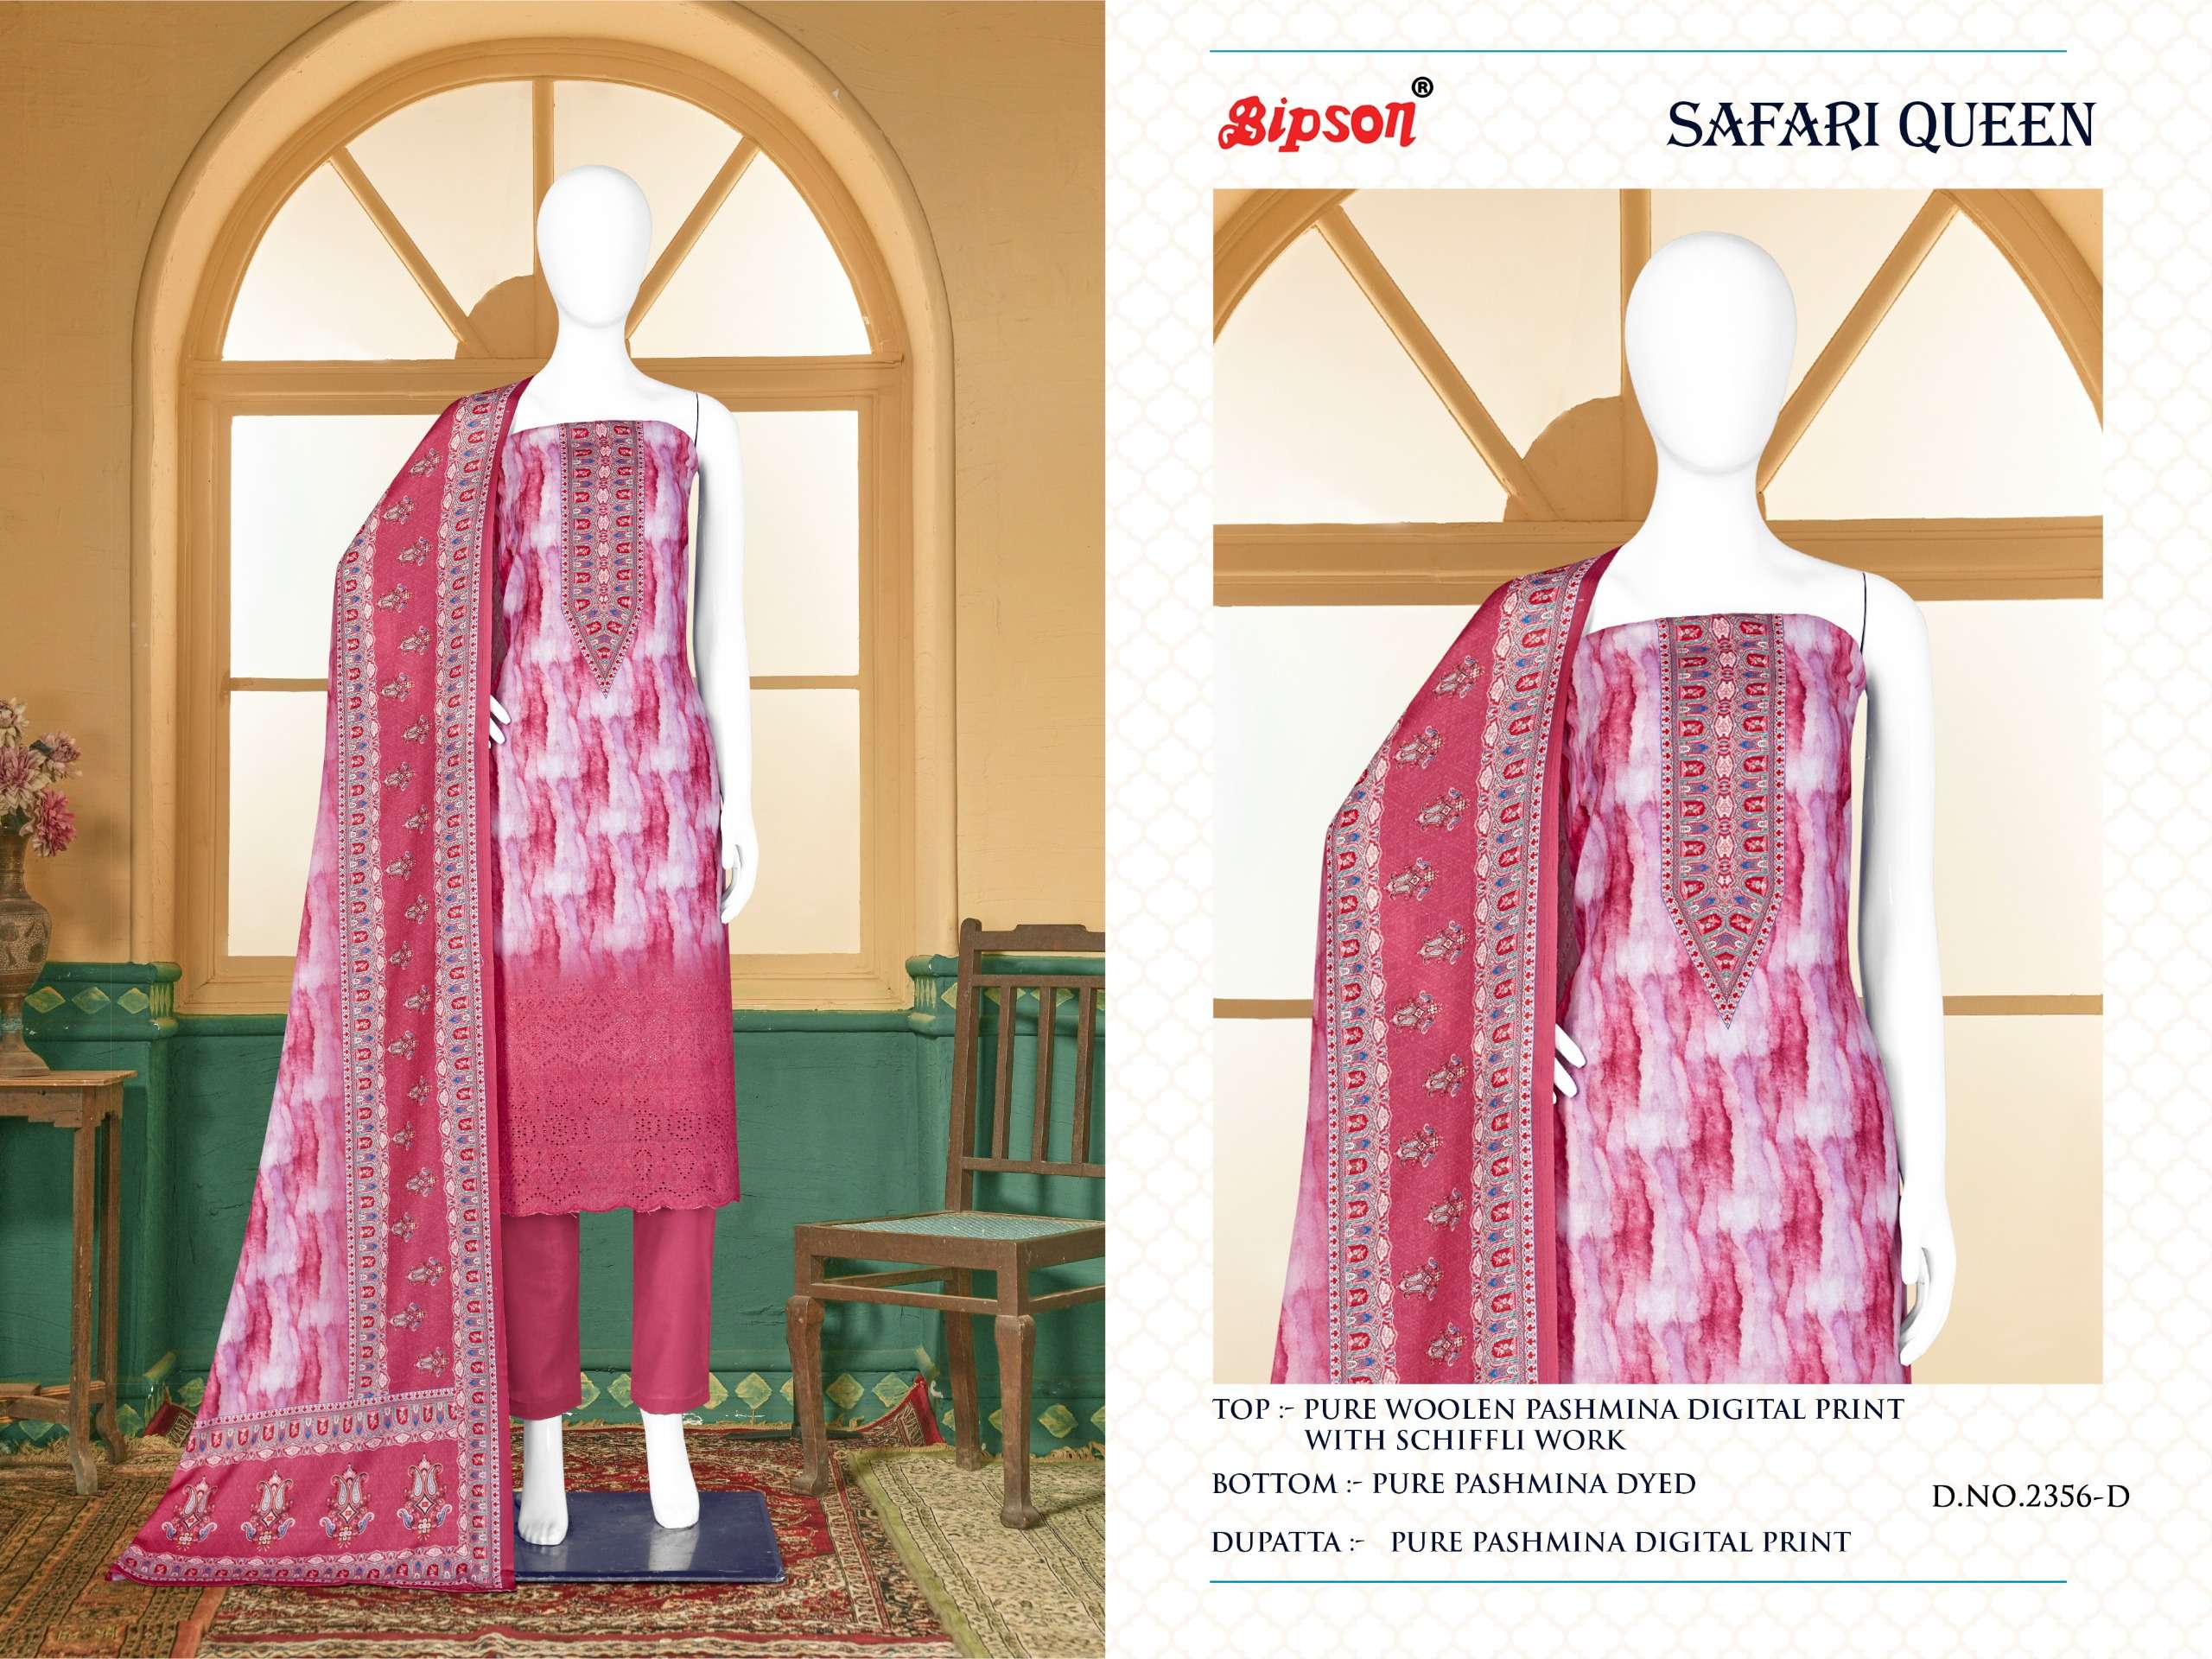 bipson safari queen 2356 colour designer fancy pakistani salwar kameez wholesaler surat gujarat